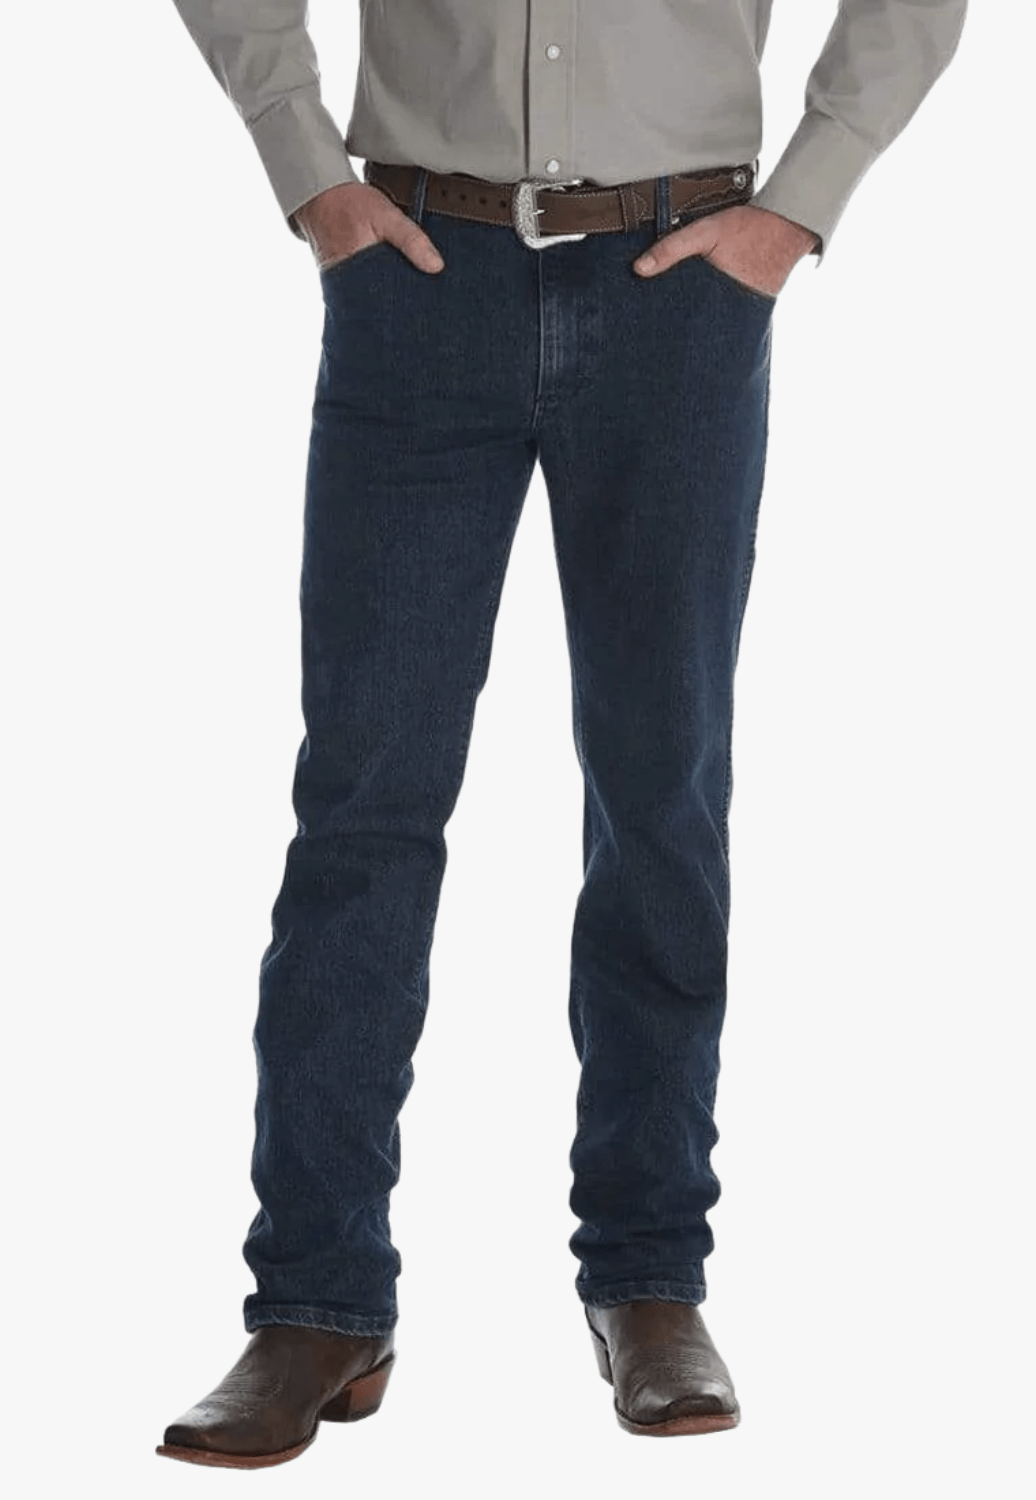 Wrangler Coolmax Jeans Giveaway!